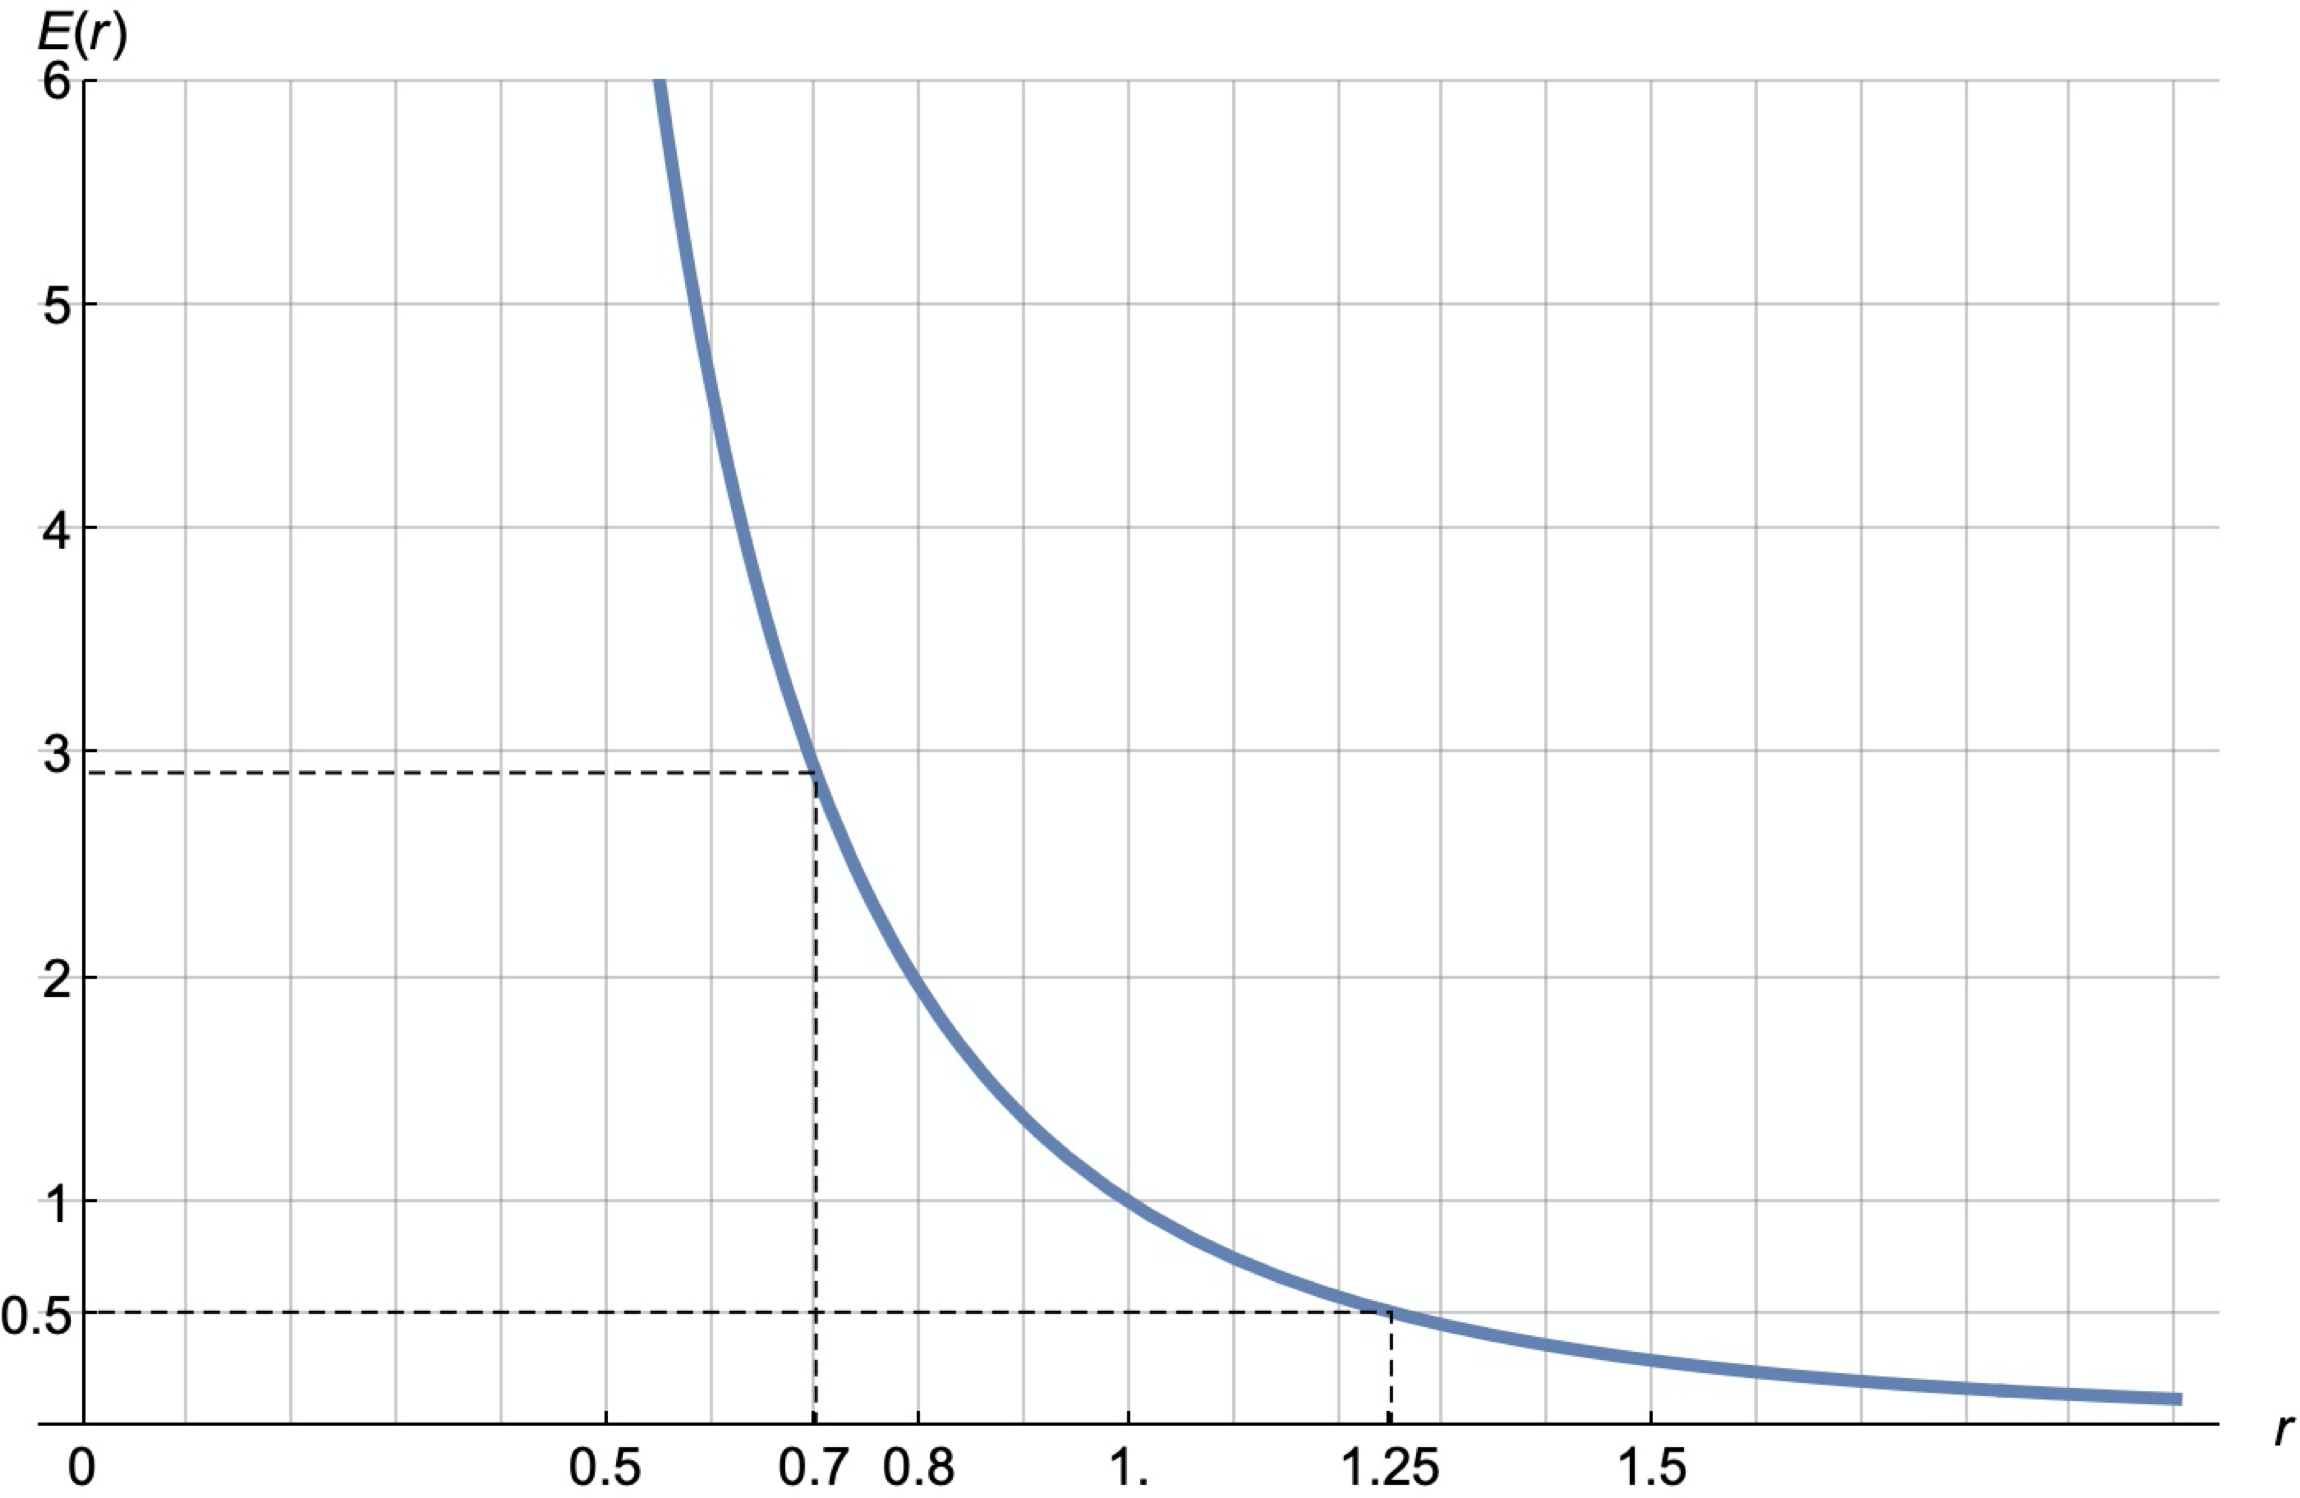 Normalized demand curve  E(r) = r^(-s),  s = 3